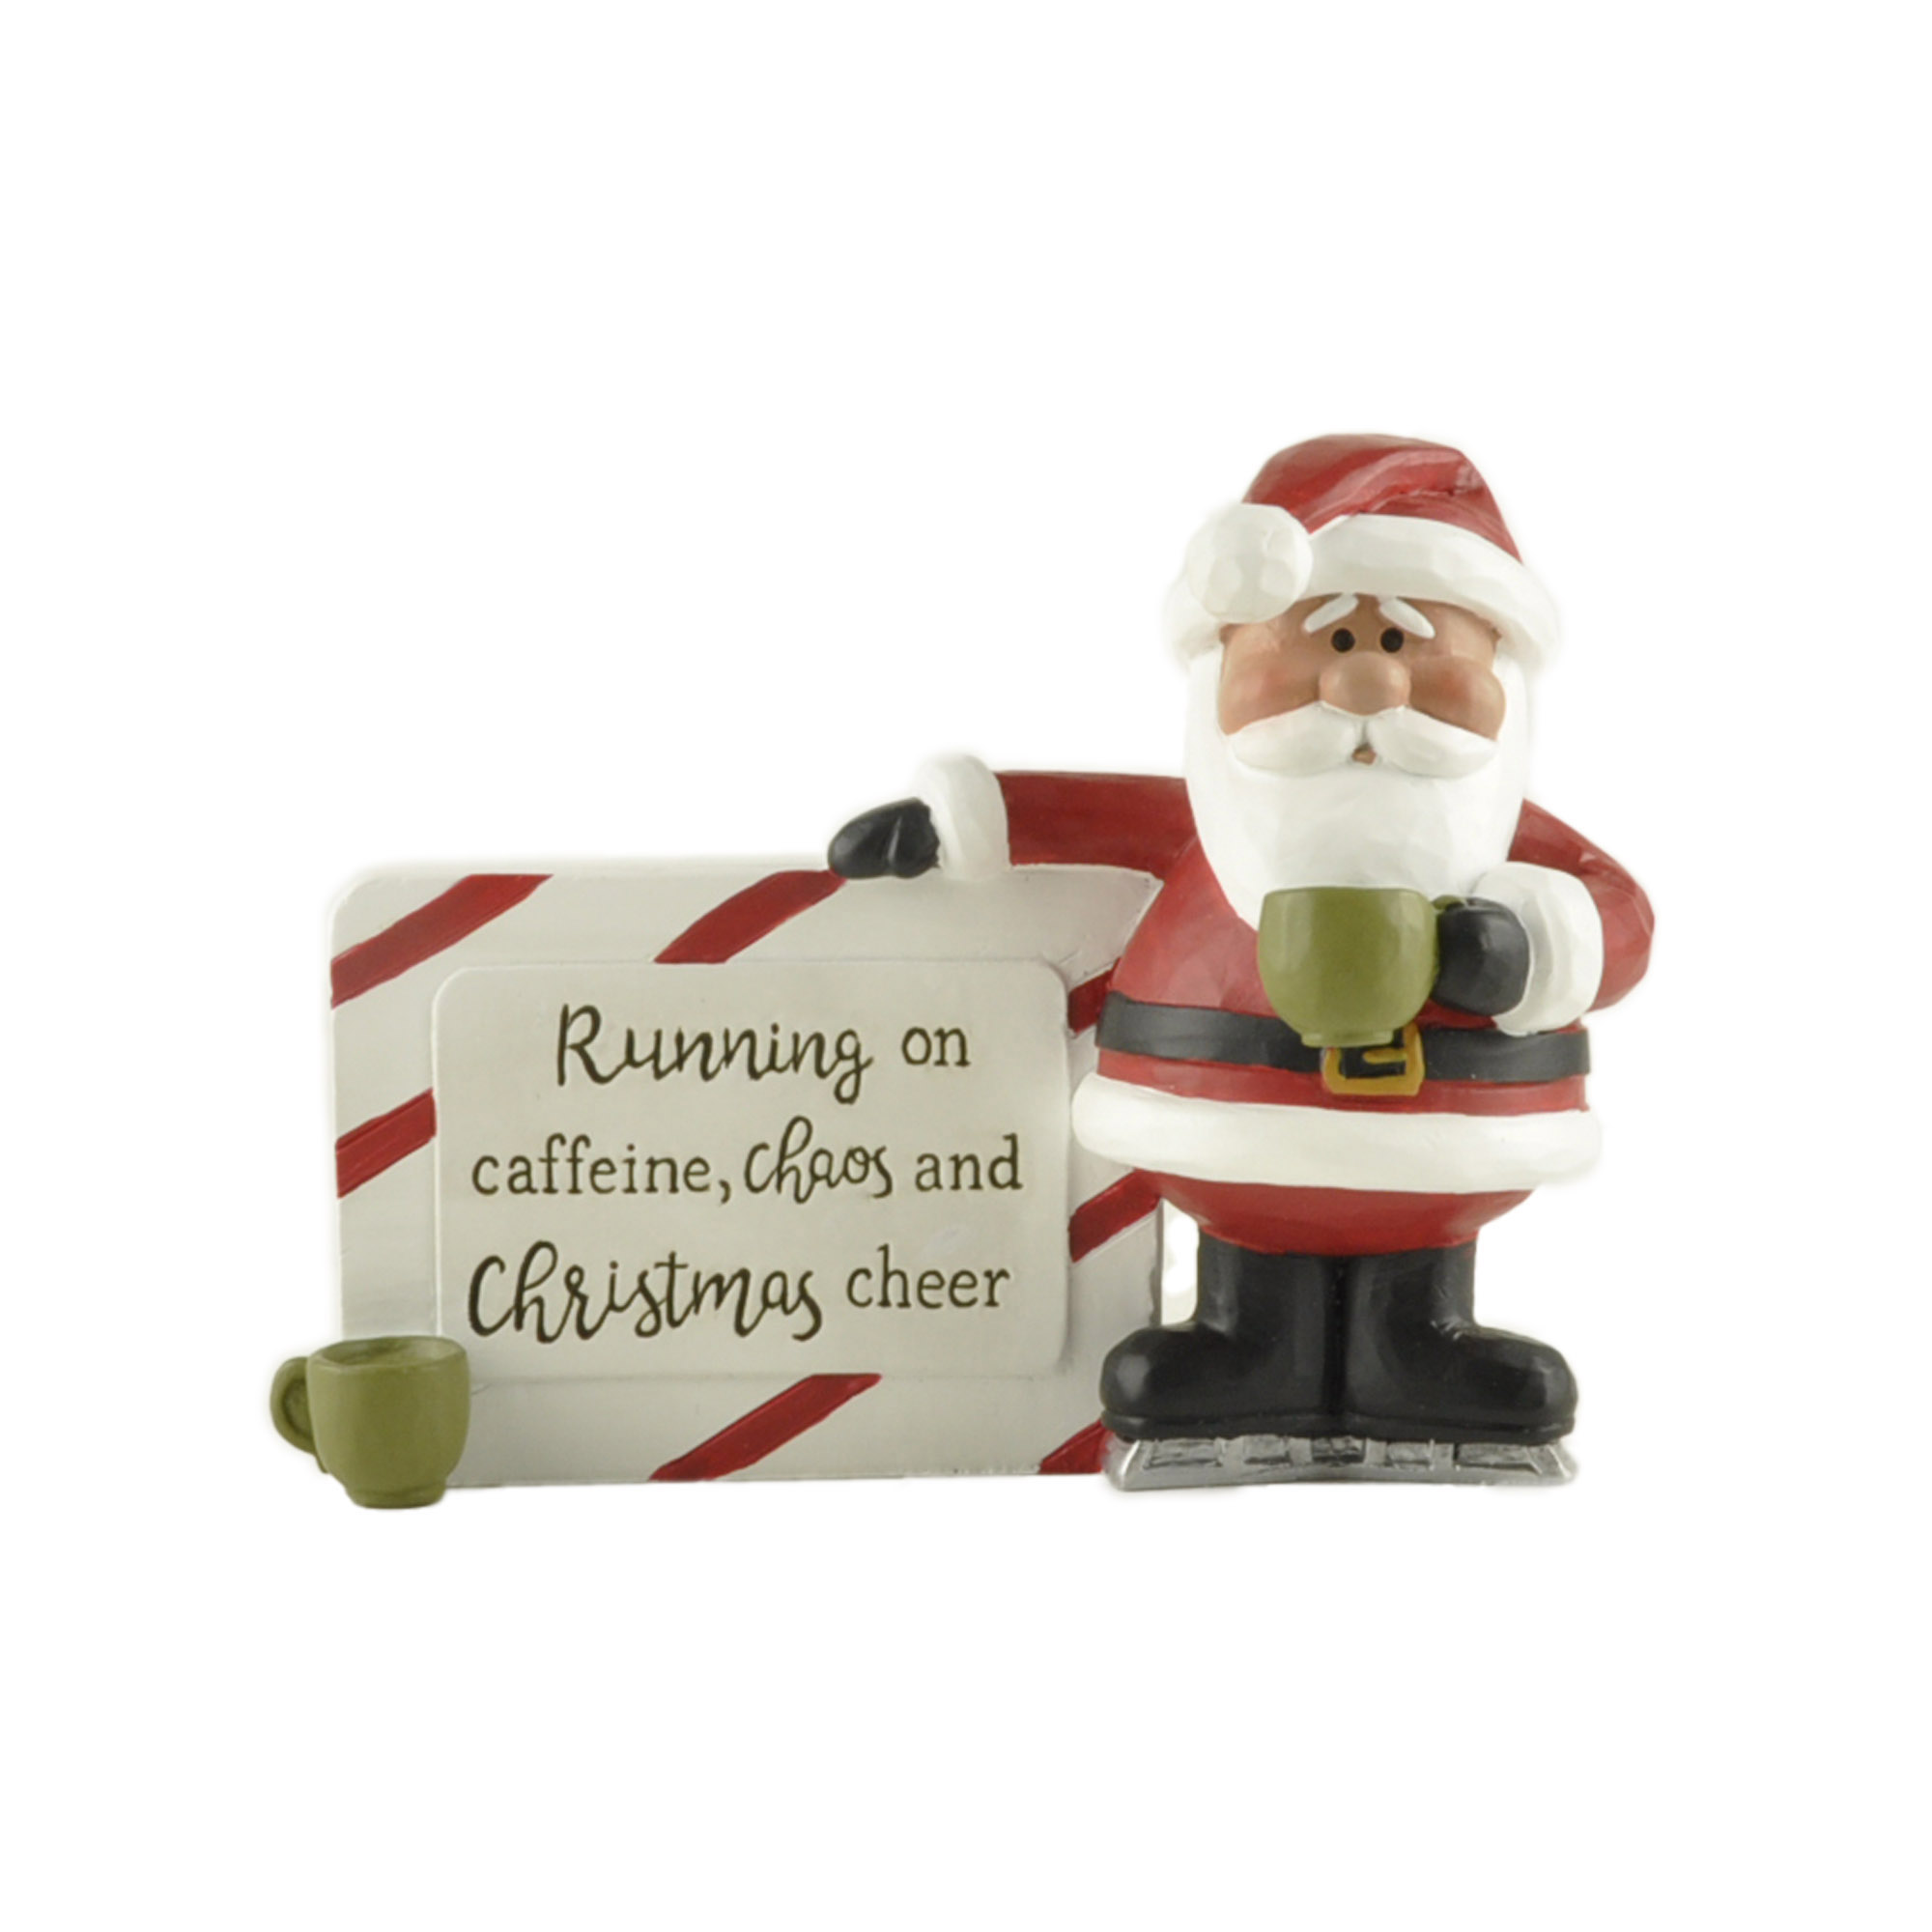 Humorous Resin Santa Figurine with Coffee Mug 'Running on Caffeine, Chaos, and Christmas Cheer' for Playful Holiday Decor 238-13910